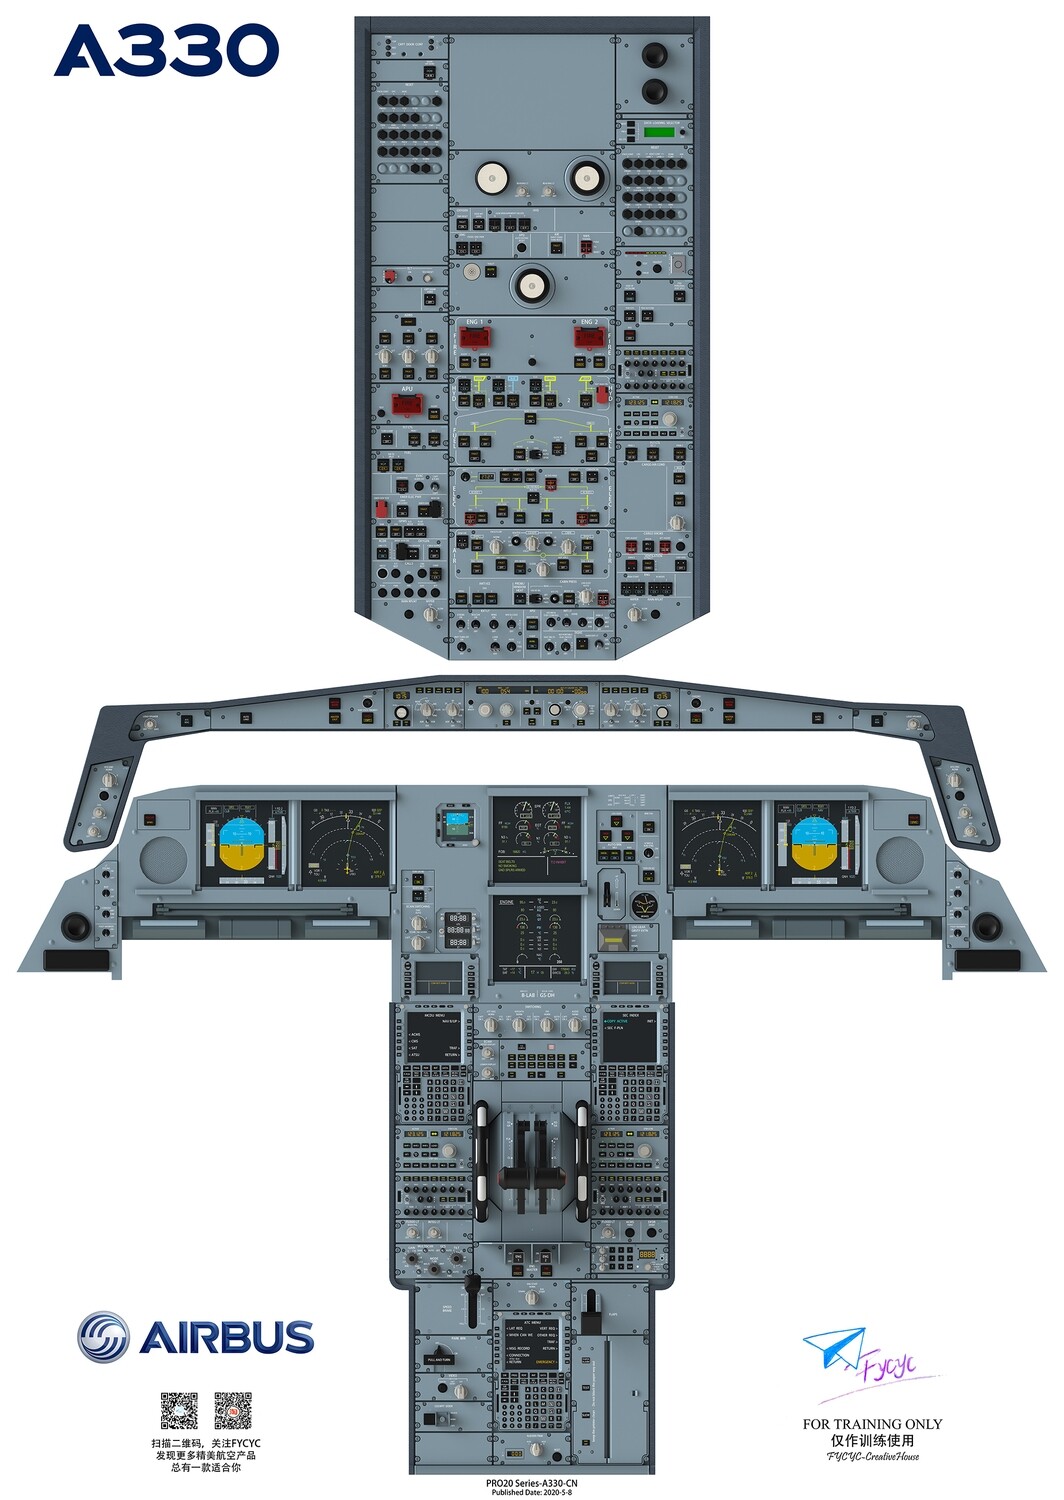 Airbus 330 Cockpit Poster